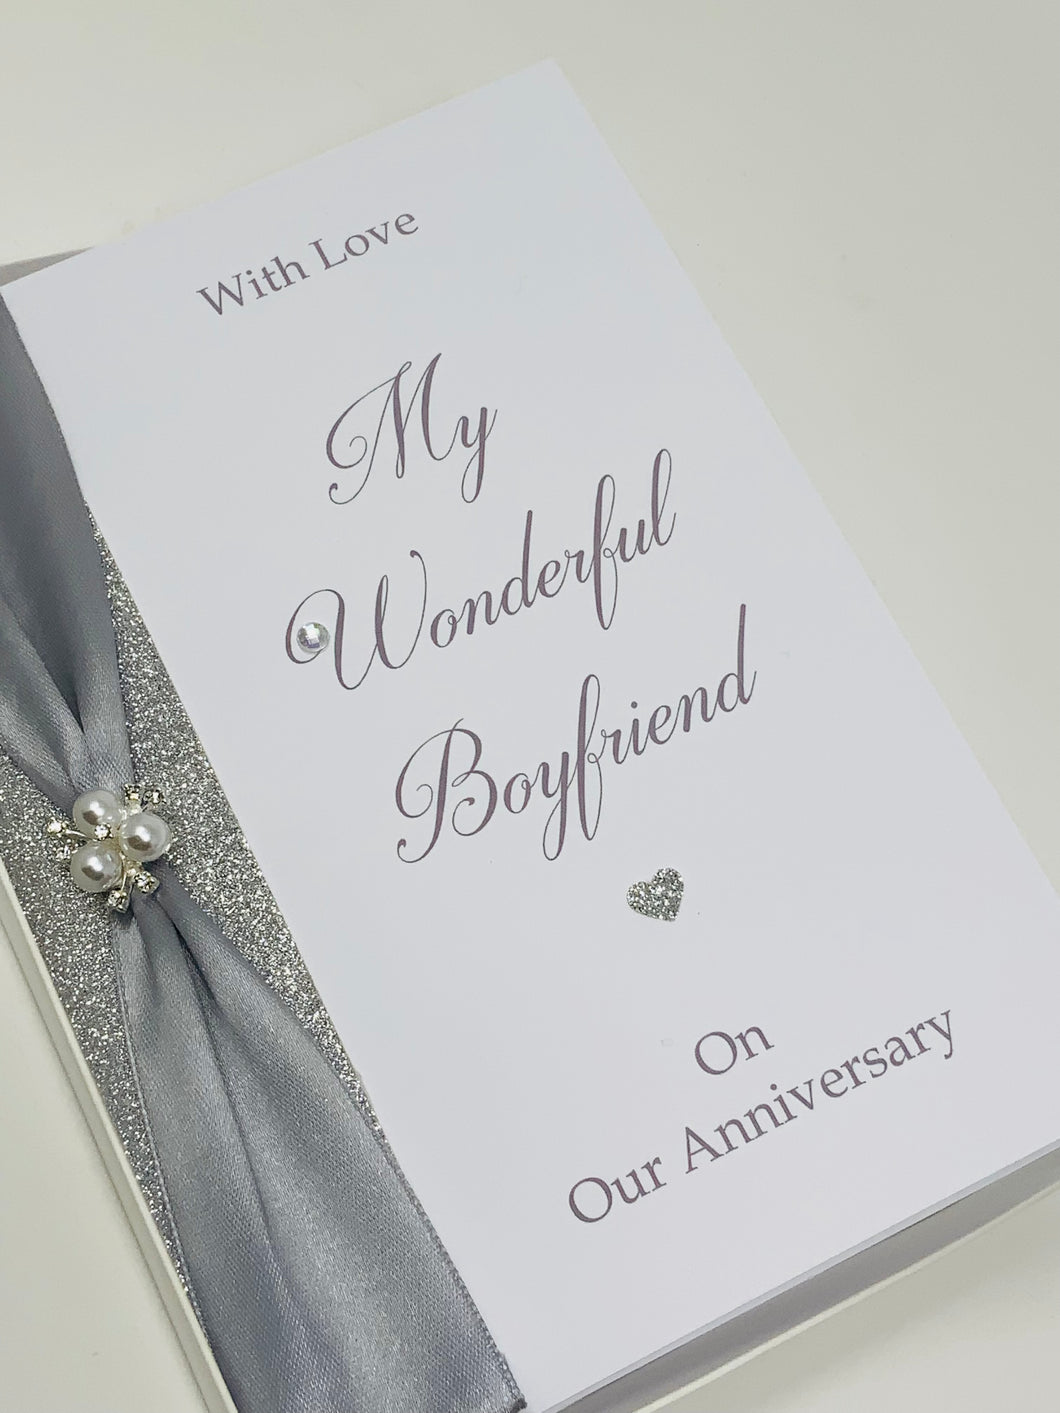 Boyfriend Anniversary Card - Personalised Luxury Handmade Card